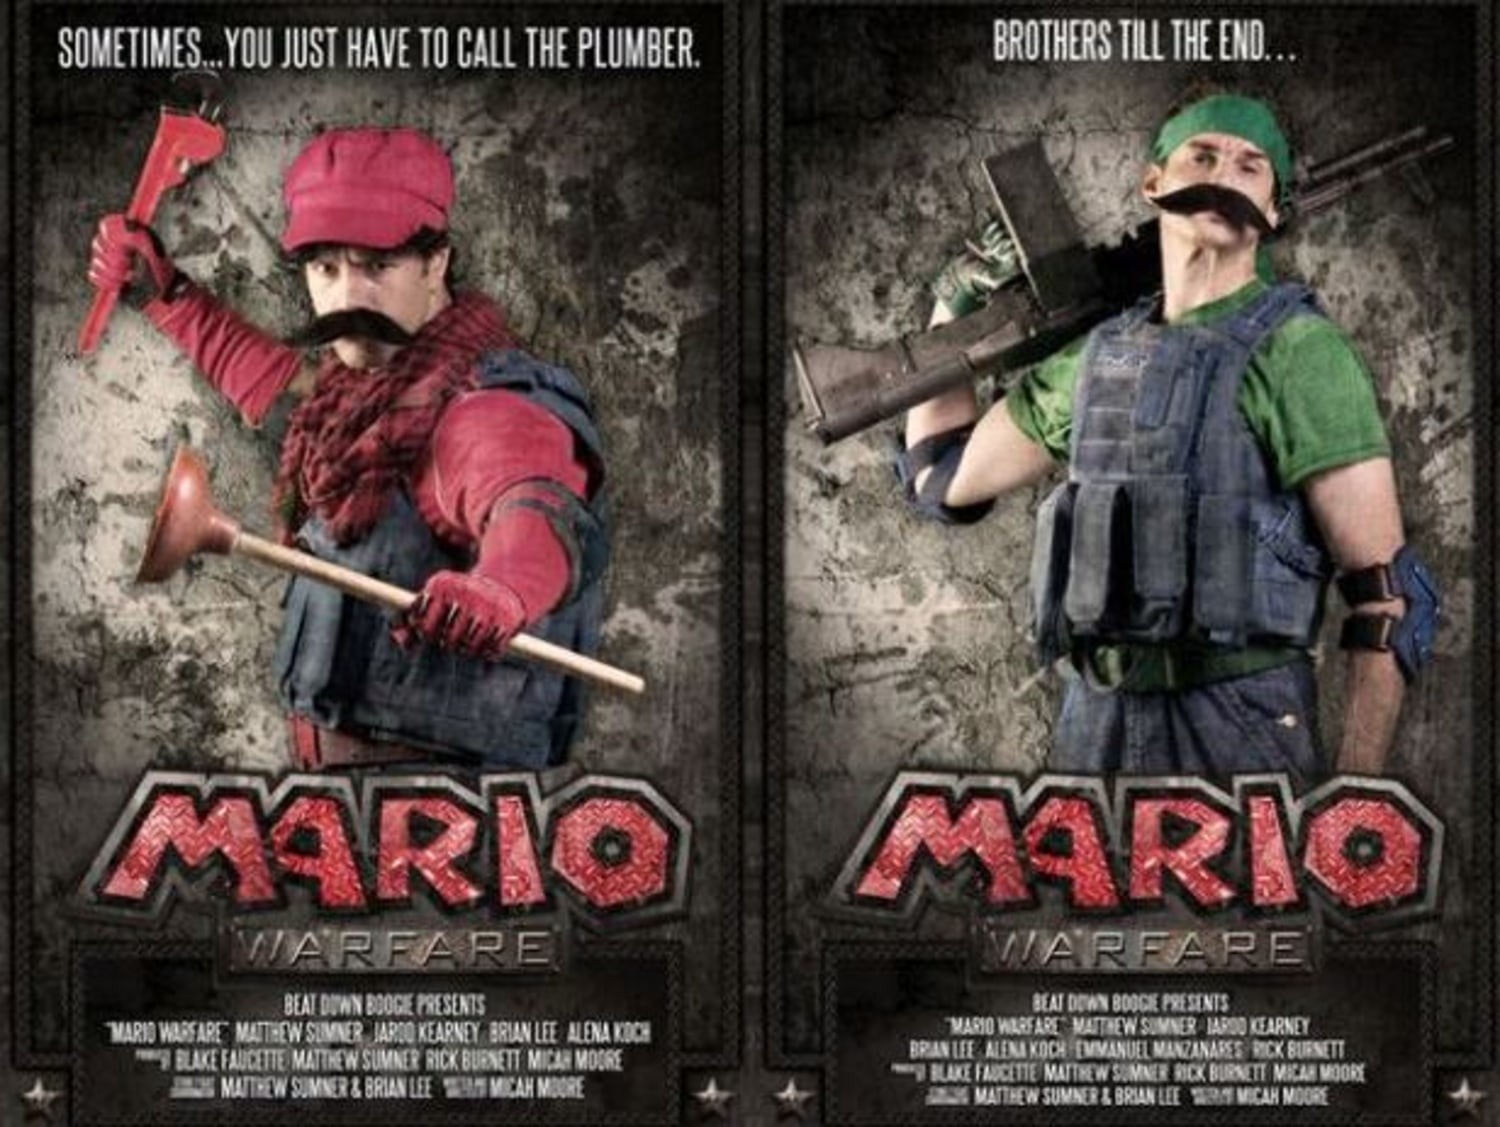 1993's 'Super Mario Bros.' is the only Mario movie we need